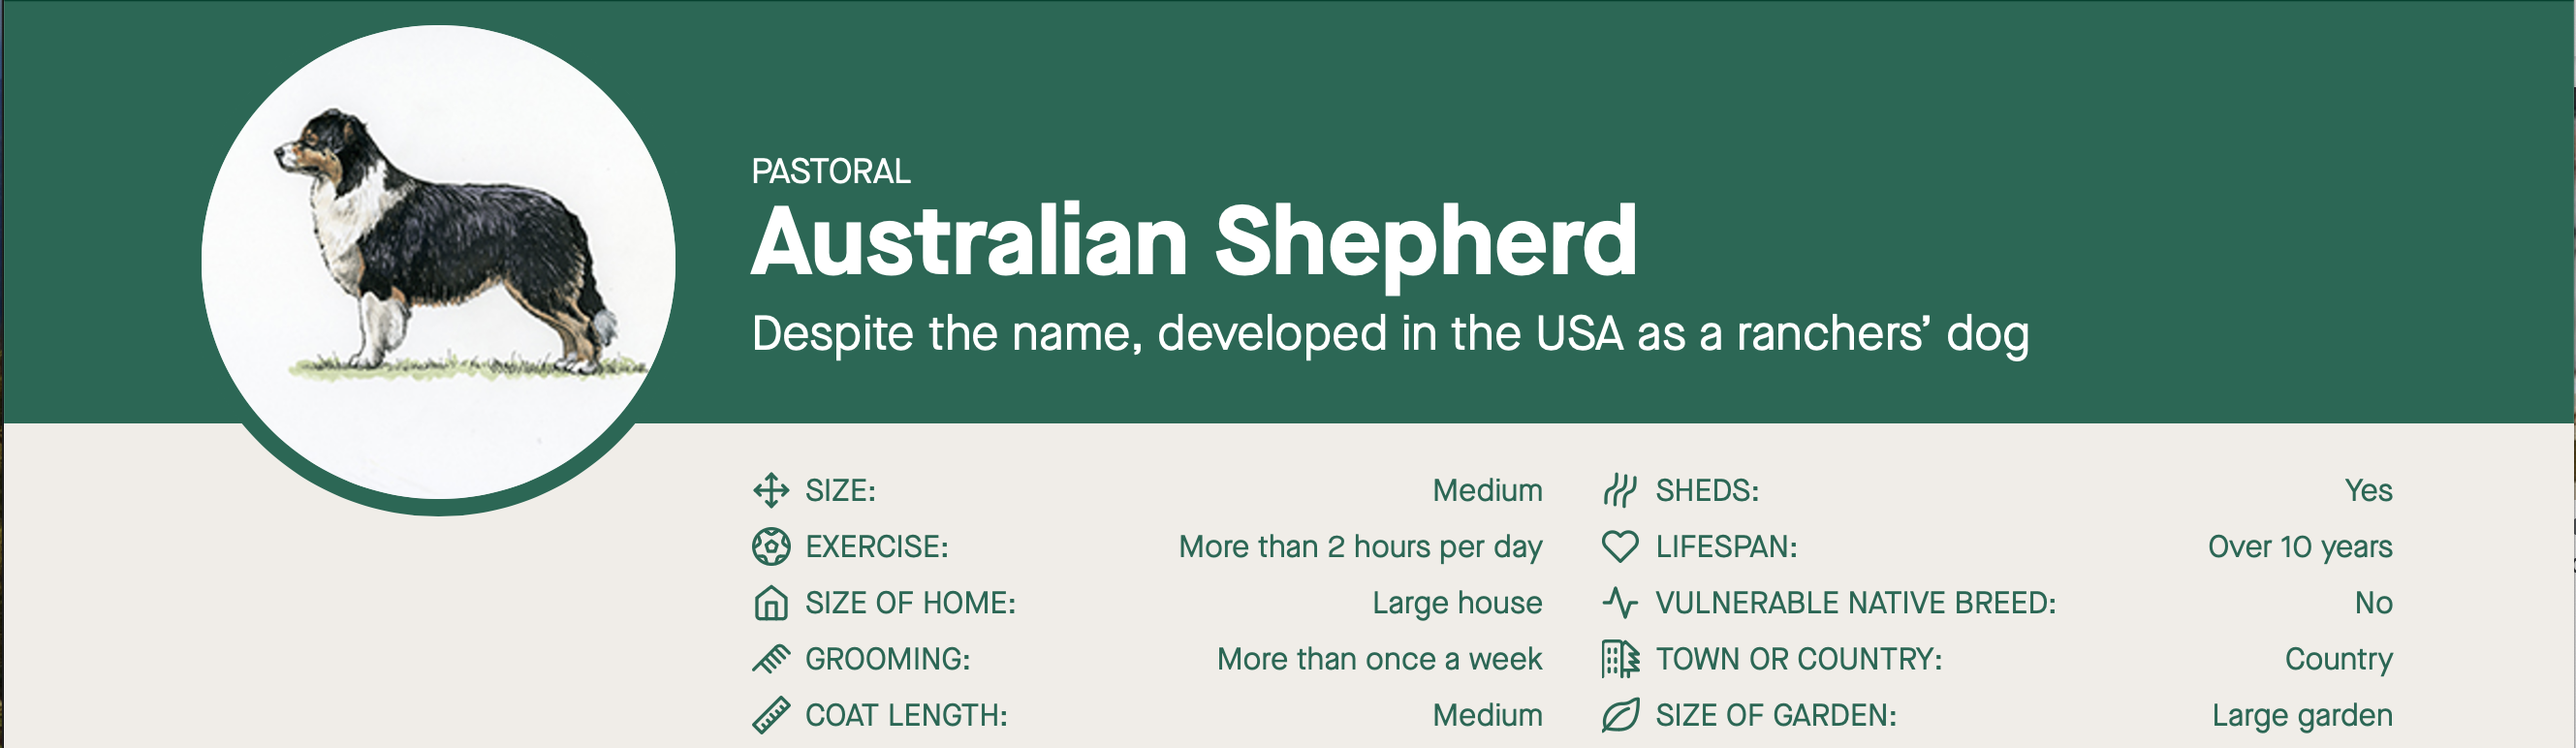 Infographic on Australian Shepherd Breed